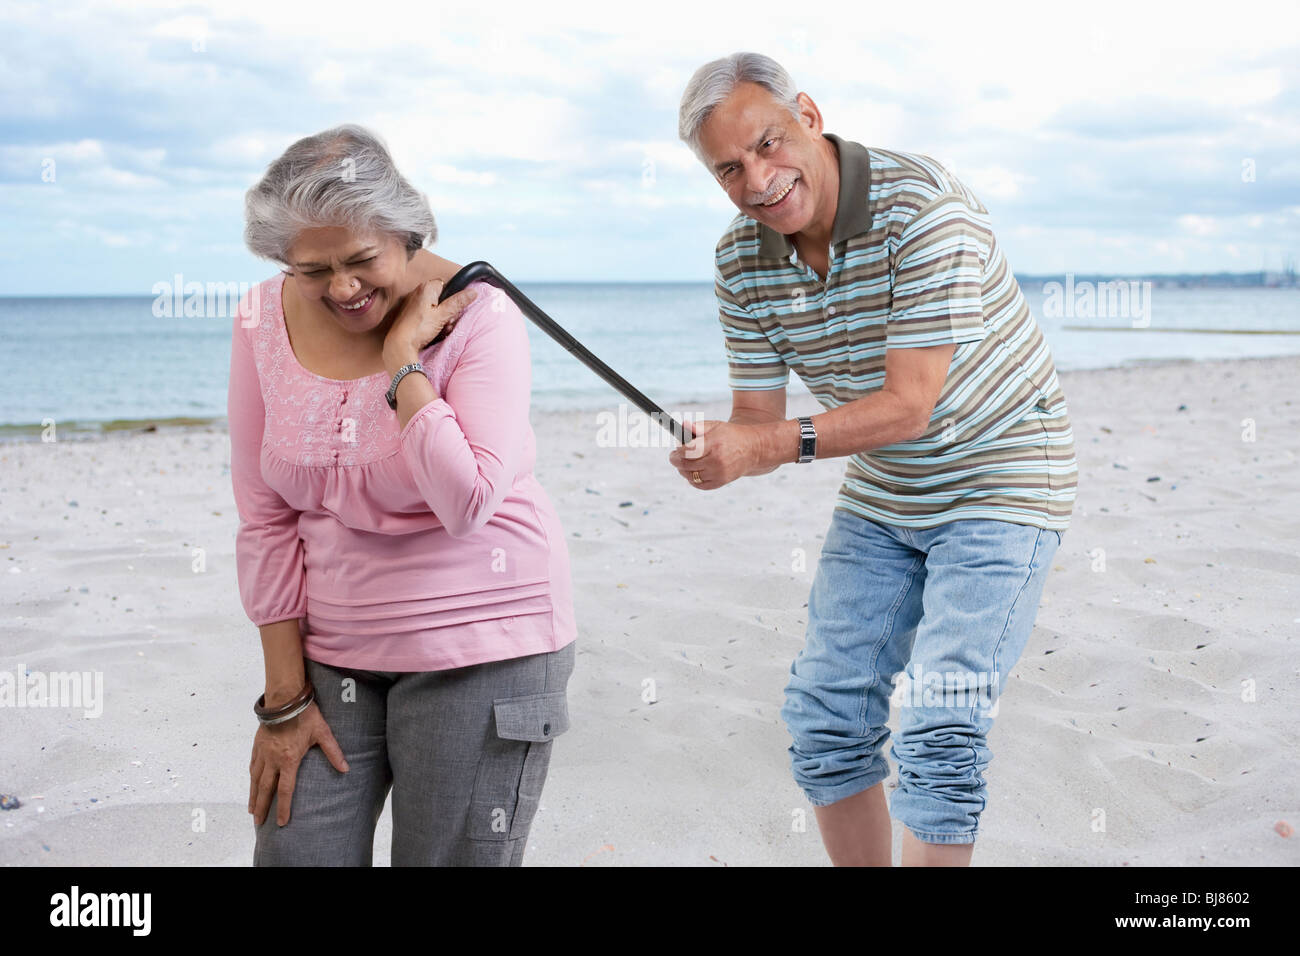 Old couple having fun Stock Photo